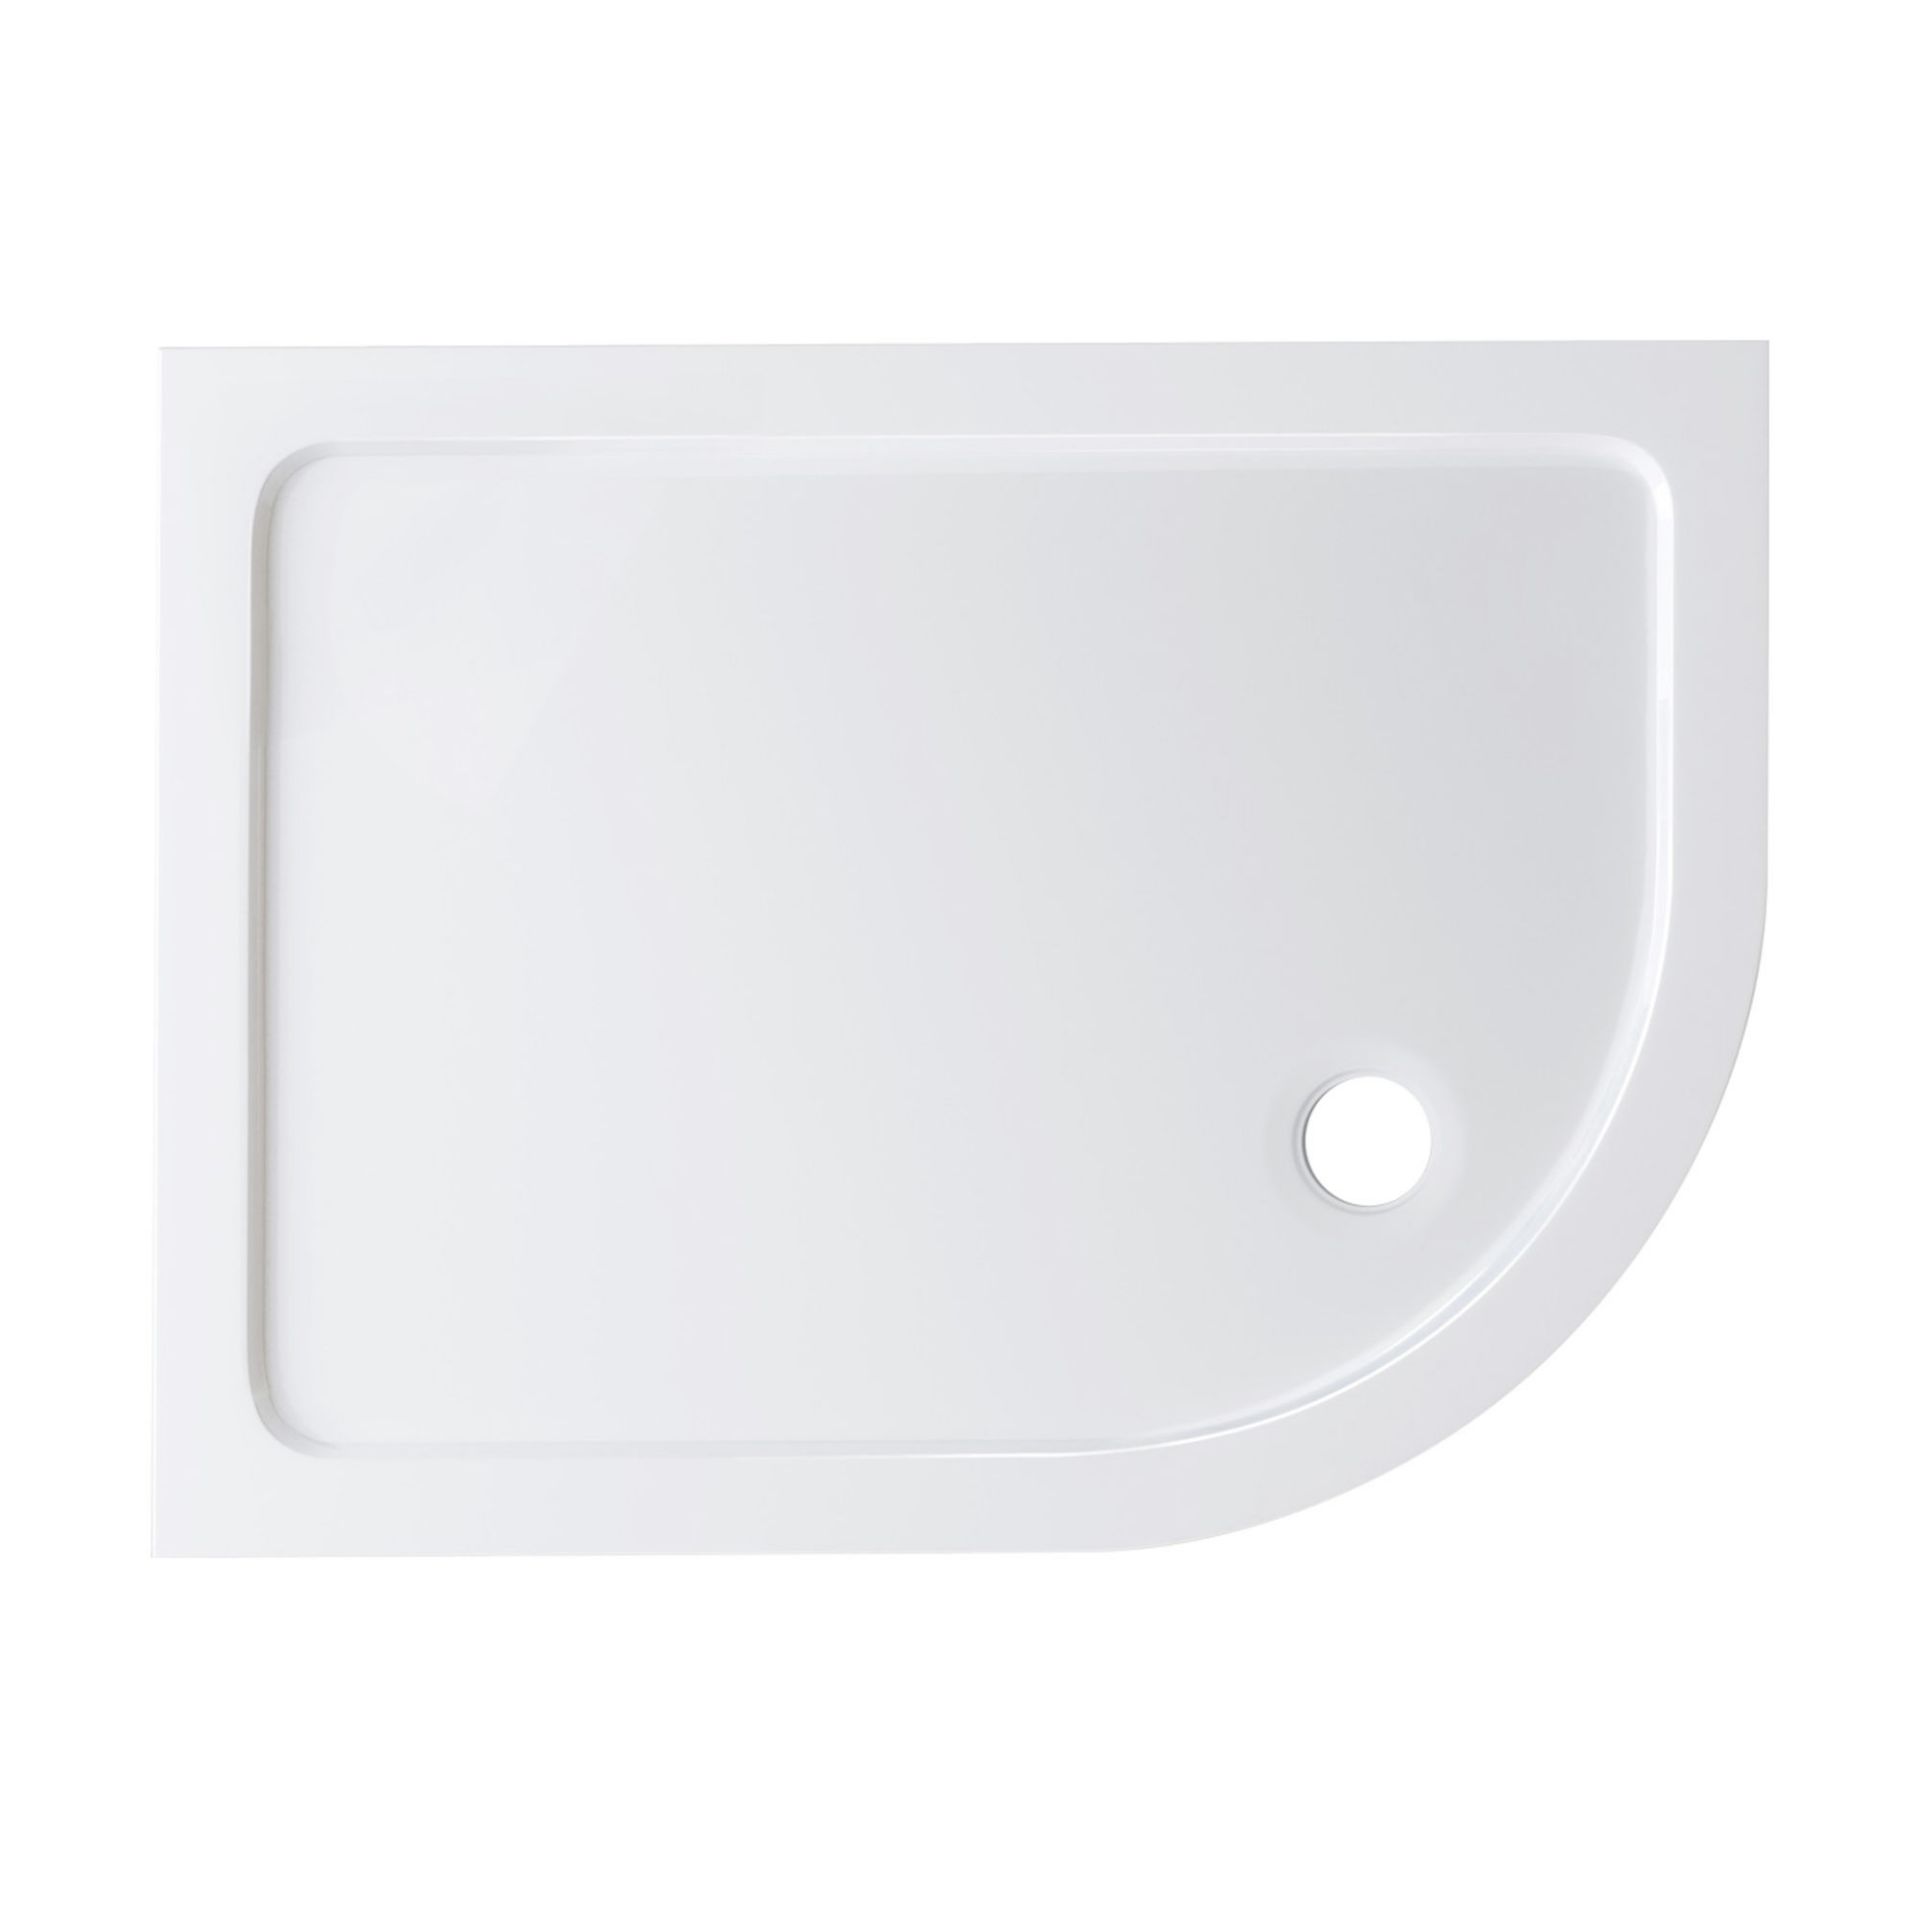 (AD91) 1200x900mm Offset Quadrant Ultra Slim Stone Shower Tray - Right. Low profile ultra slim